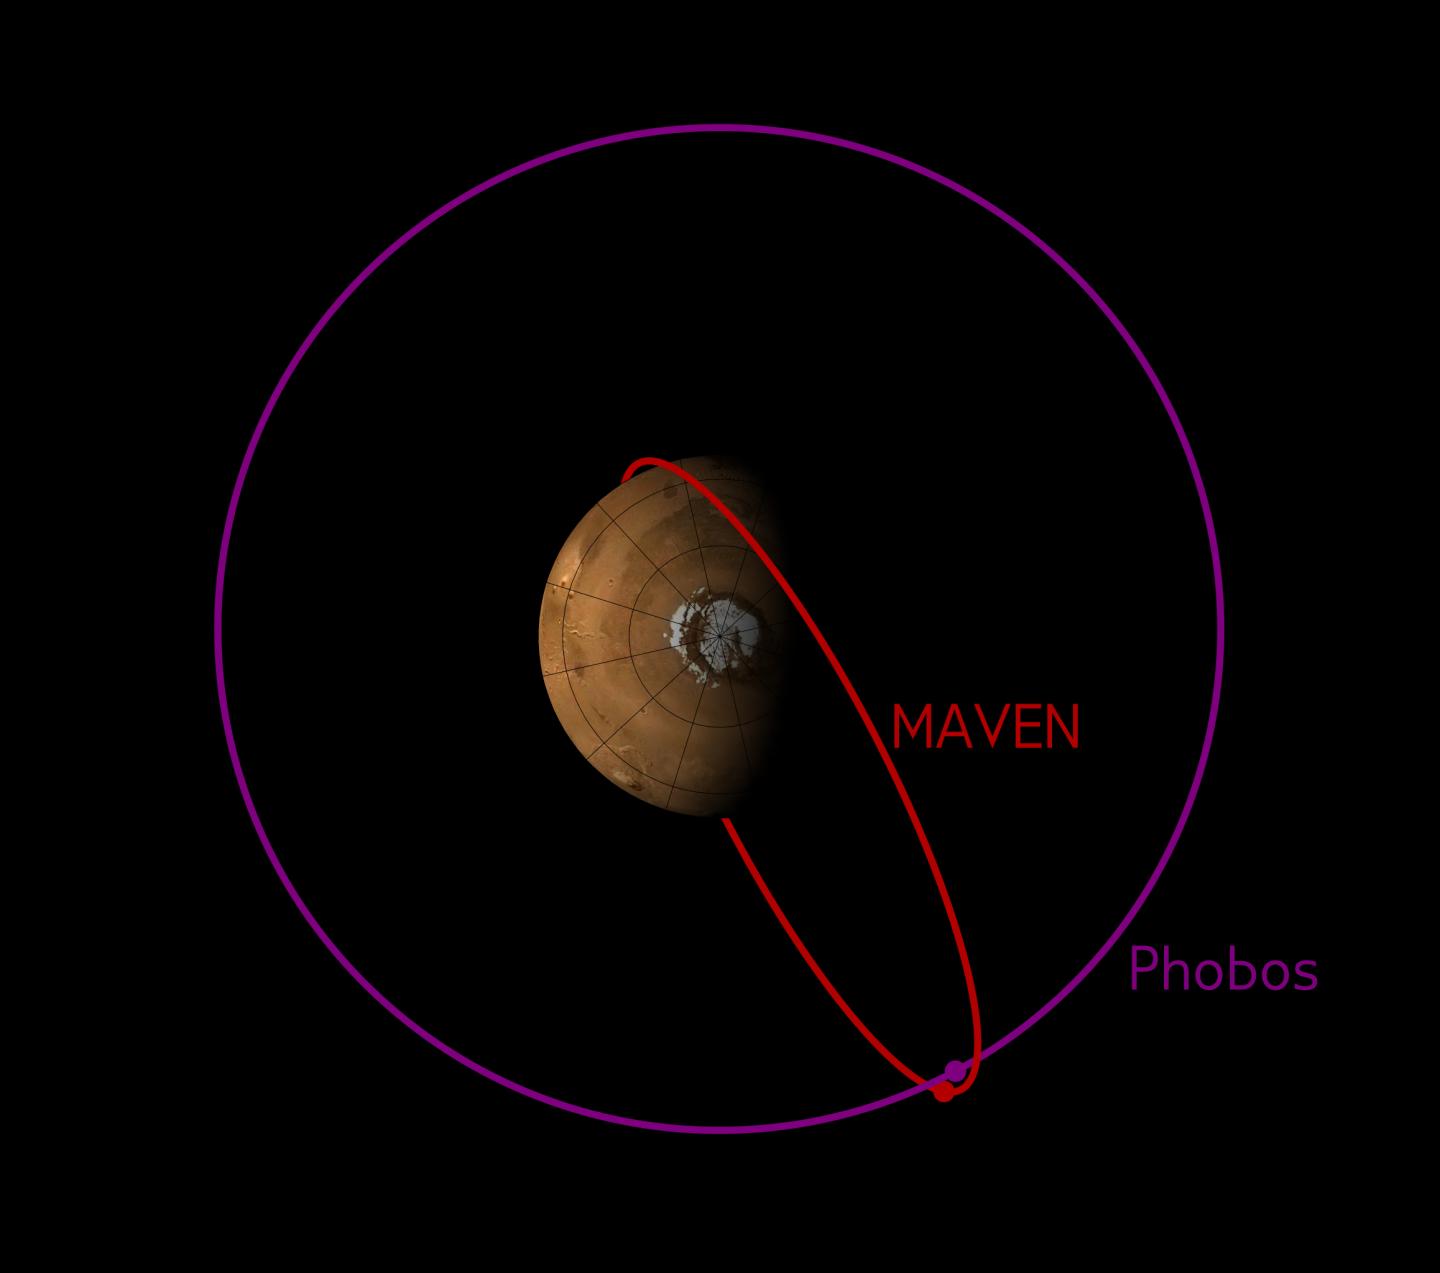 Orbit of MAVEN Sometimes Crosses the Orbit of Phobos